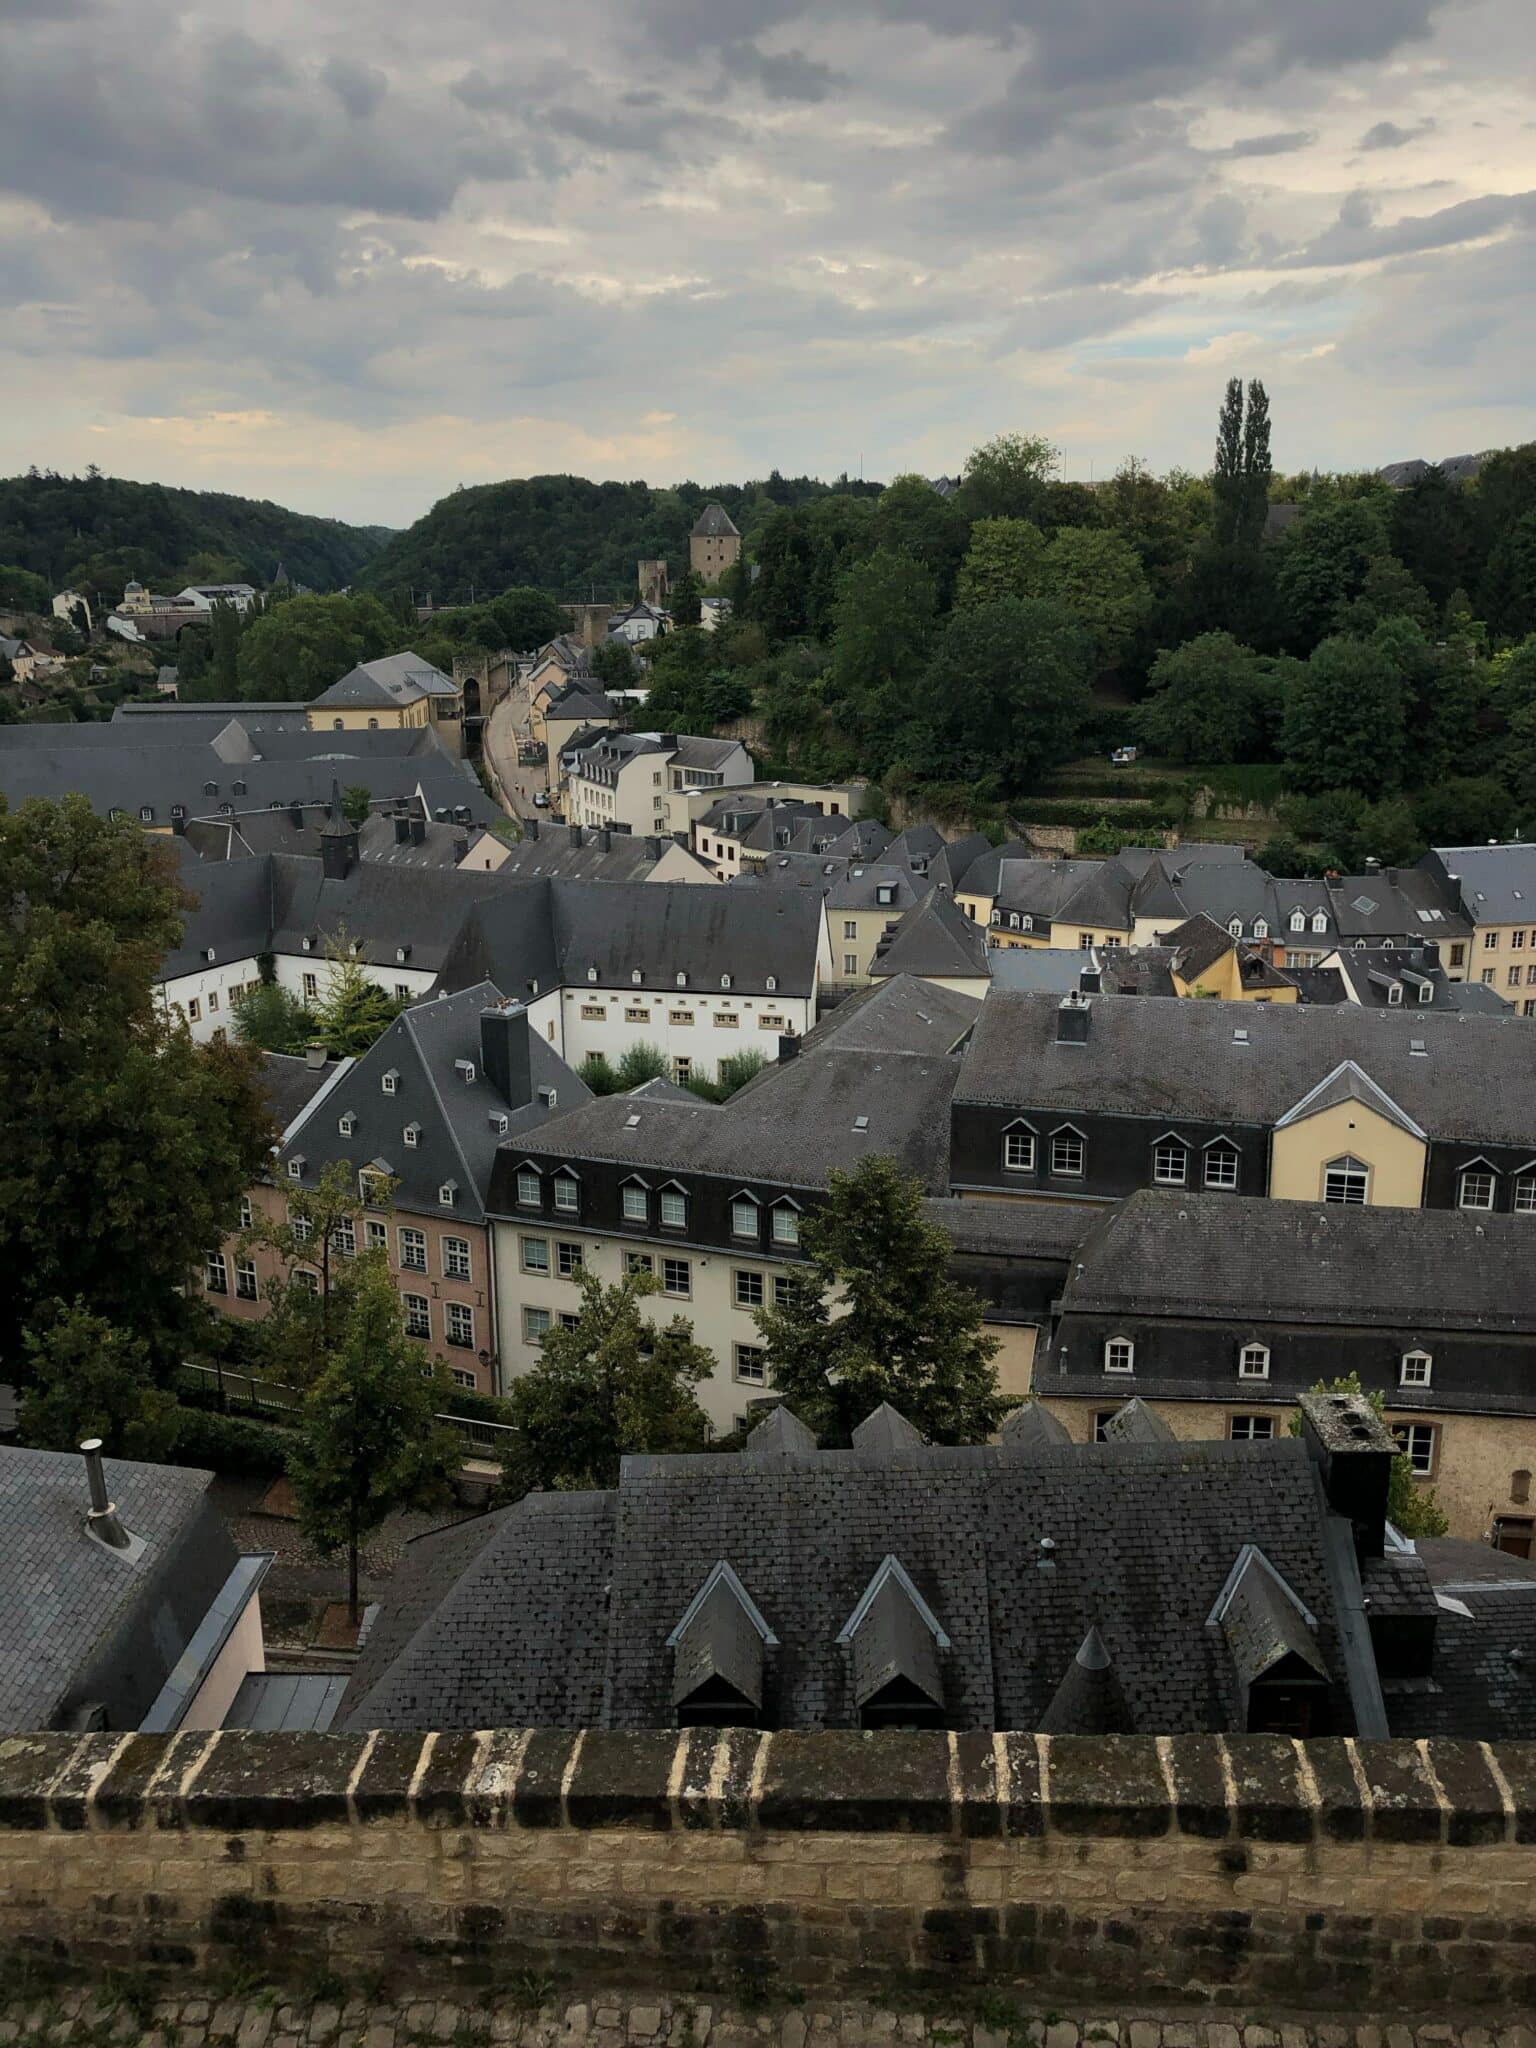 The Luxembourg Investor Visa Program